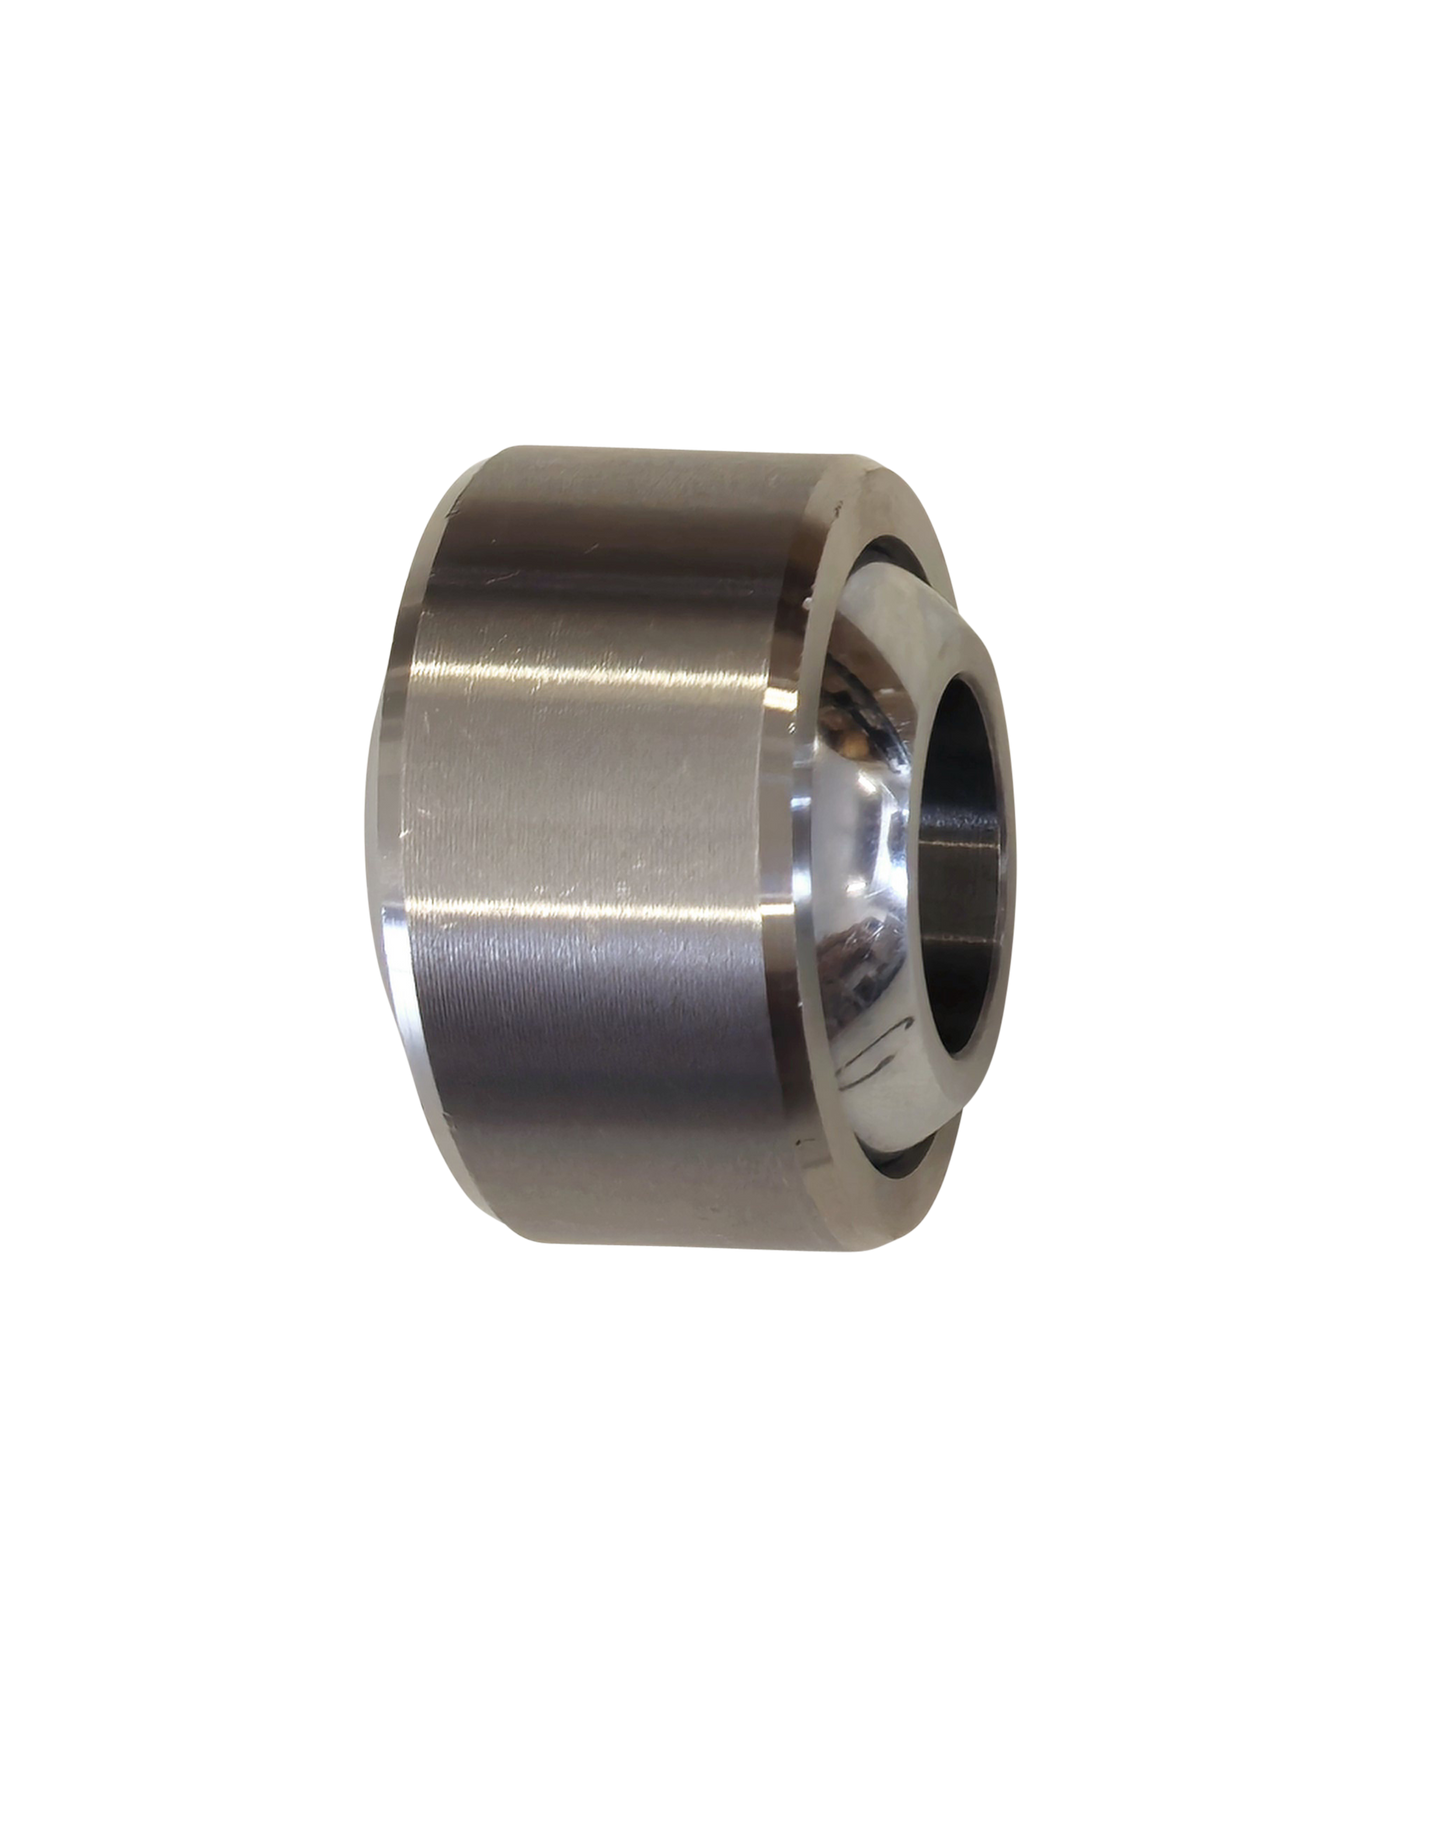 1.5" Bore  Uniball bearing